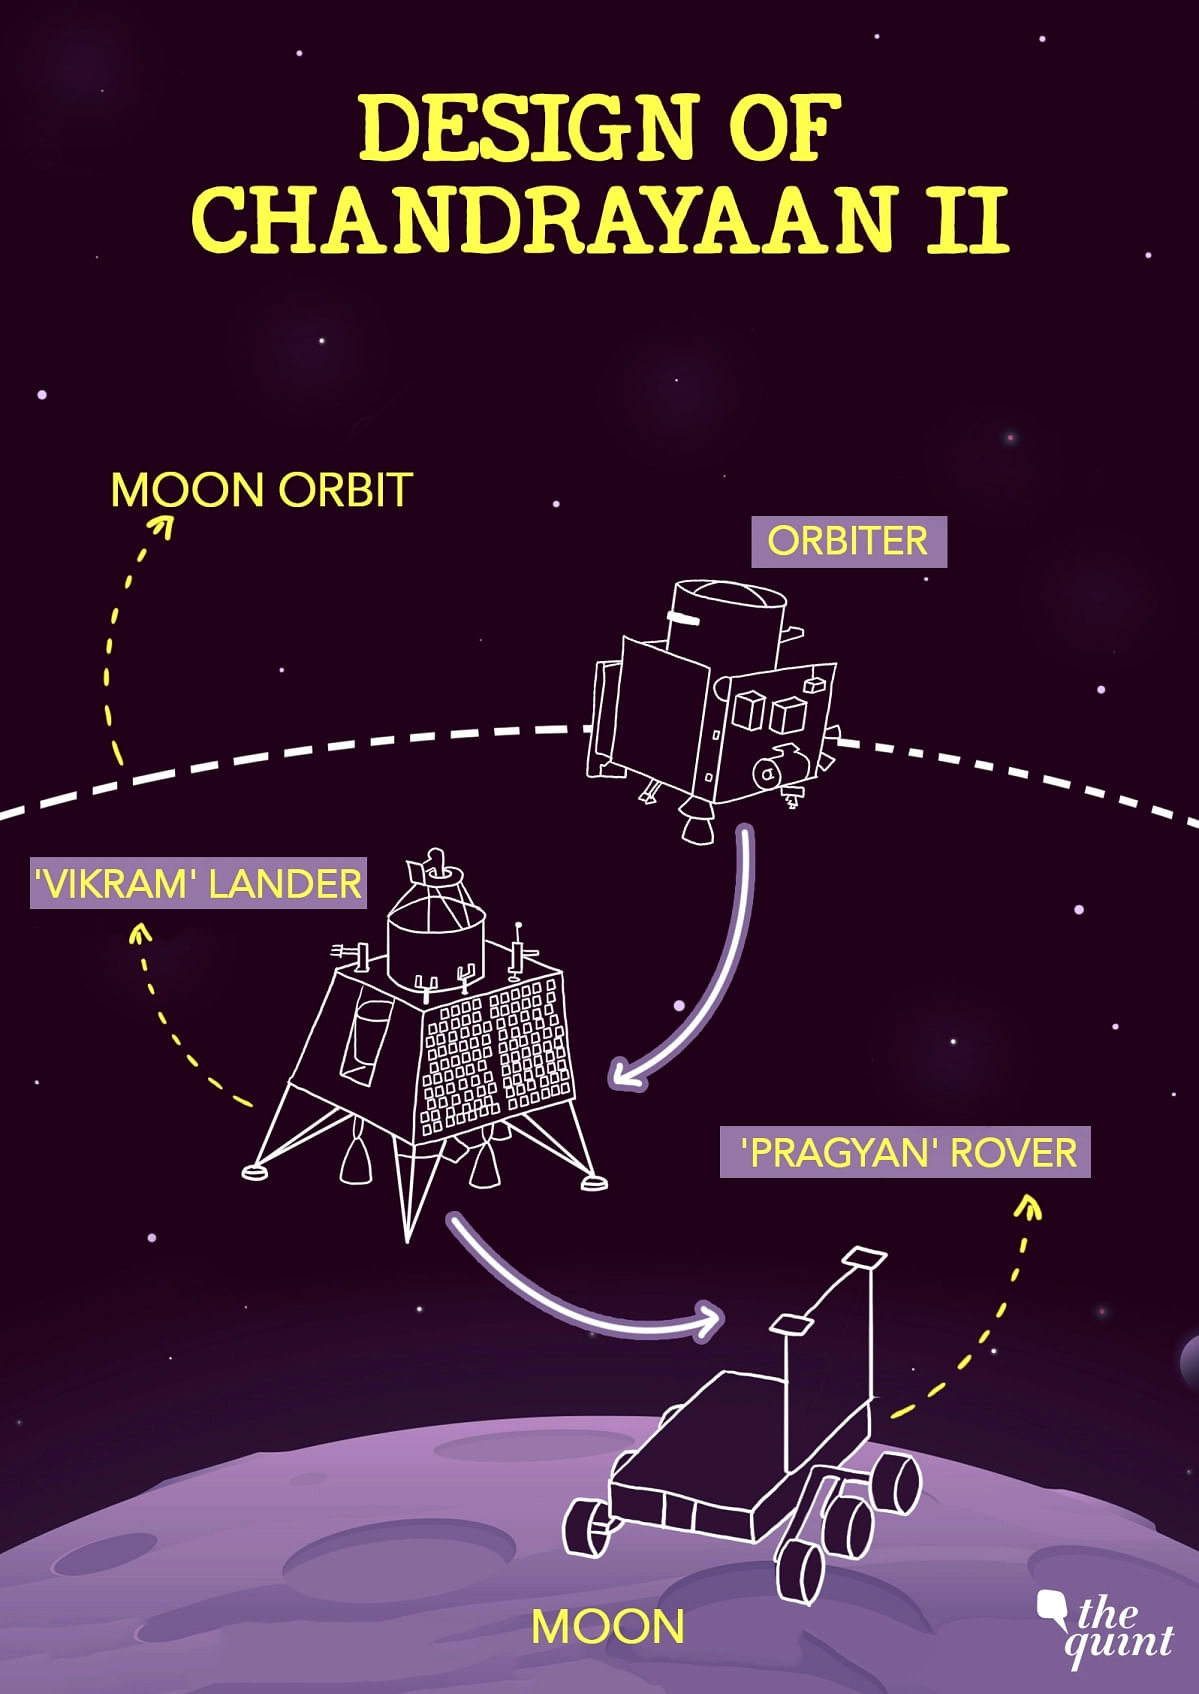 After final lunar orbit manoeuvre, ISRO readies for separation.